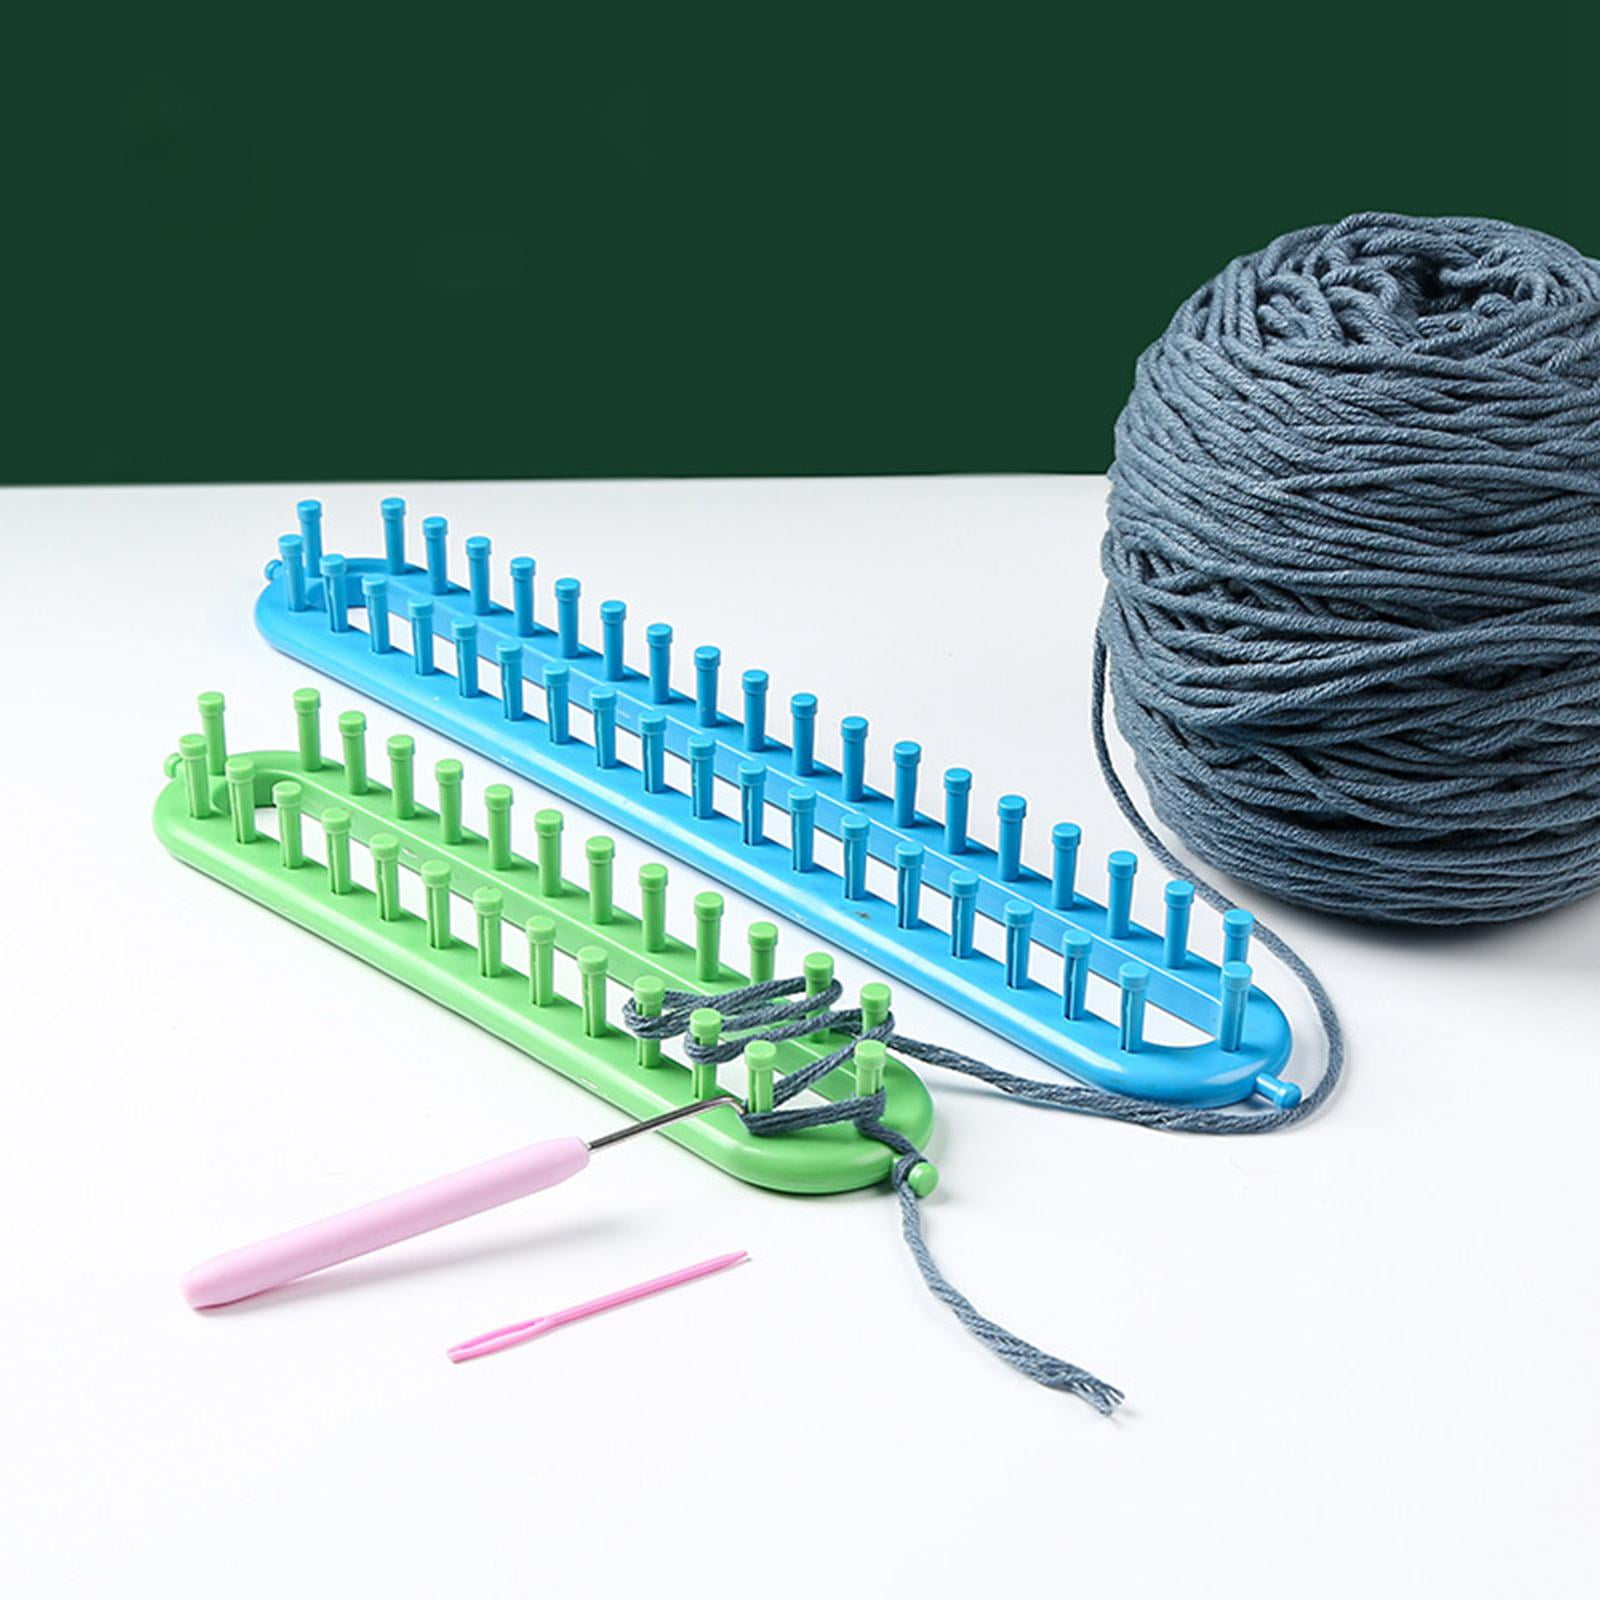 New Yarnology Round Loom 3 Sizes Crafting Crochet Knitting